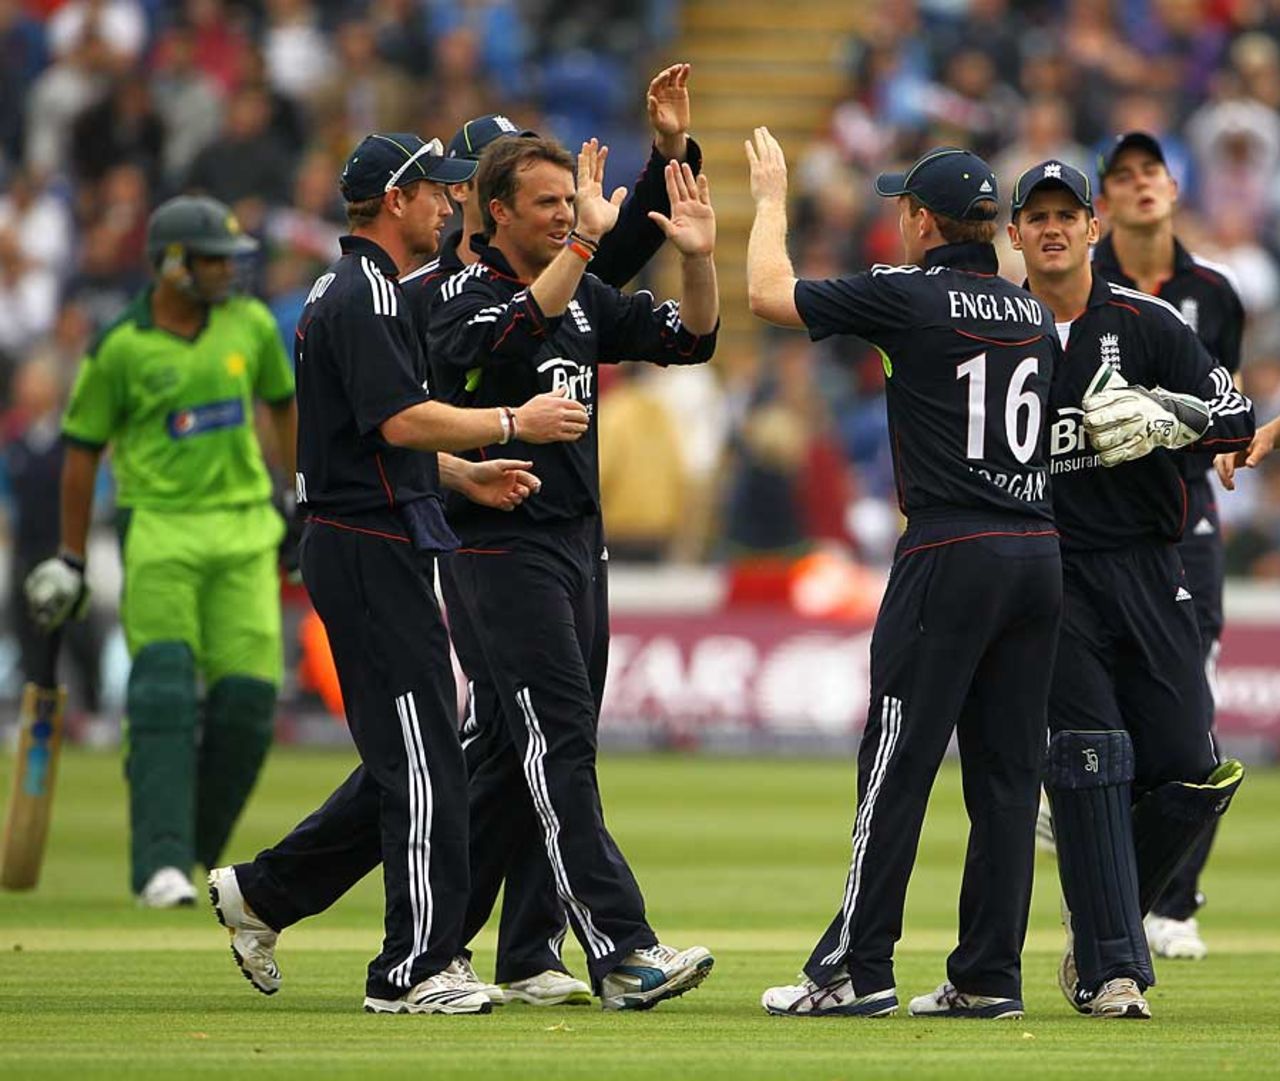 Graeme Swann took 2 for 14 in a superb spell, England v Pakistan, 1st T20I, Cardiff, September 5, 2010